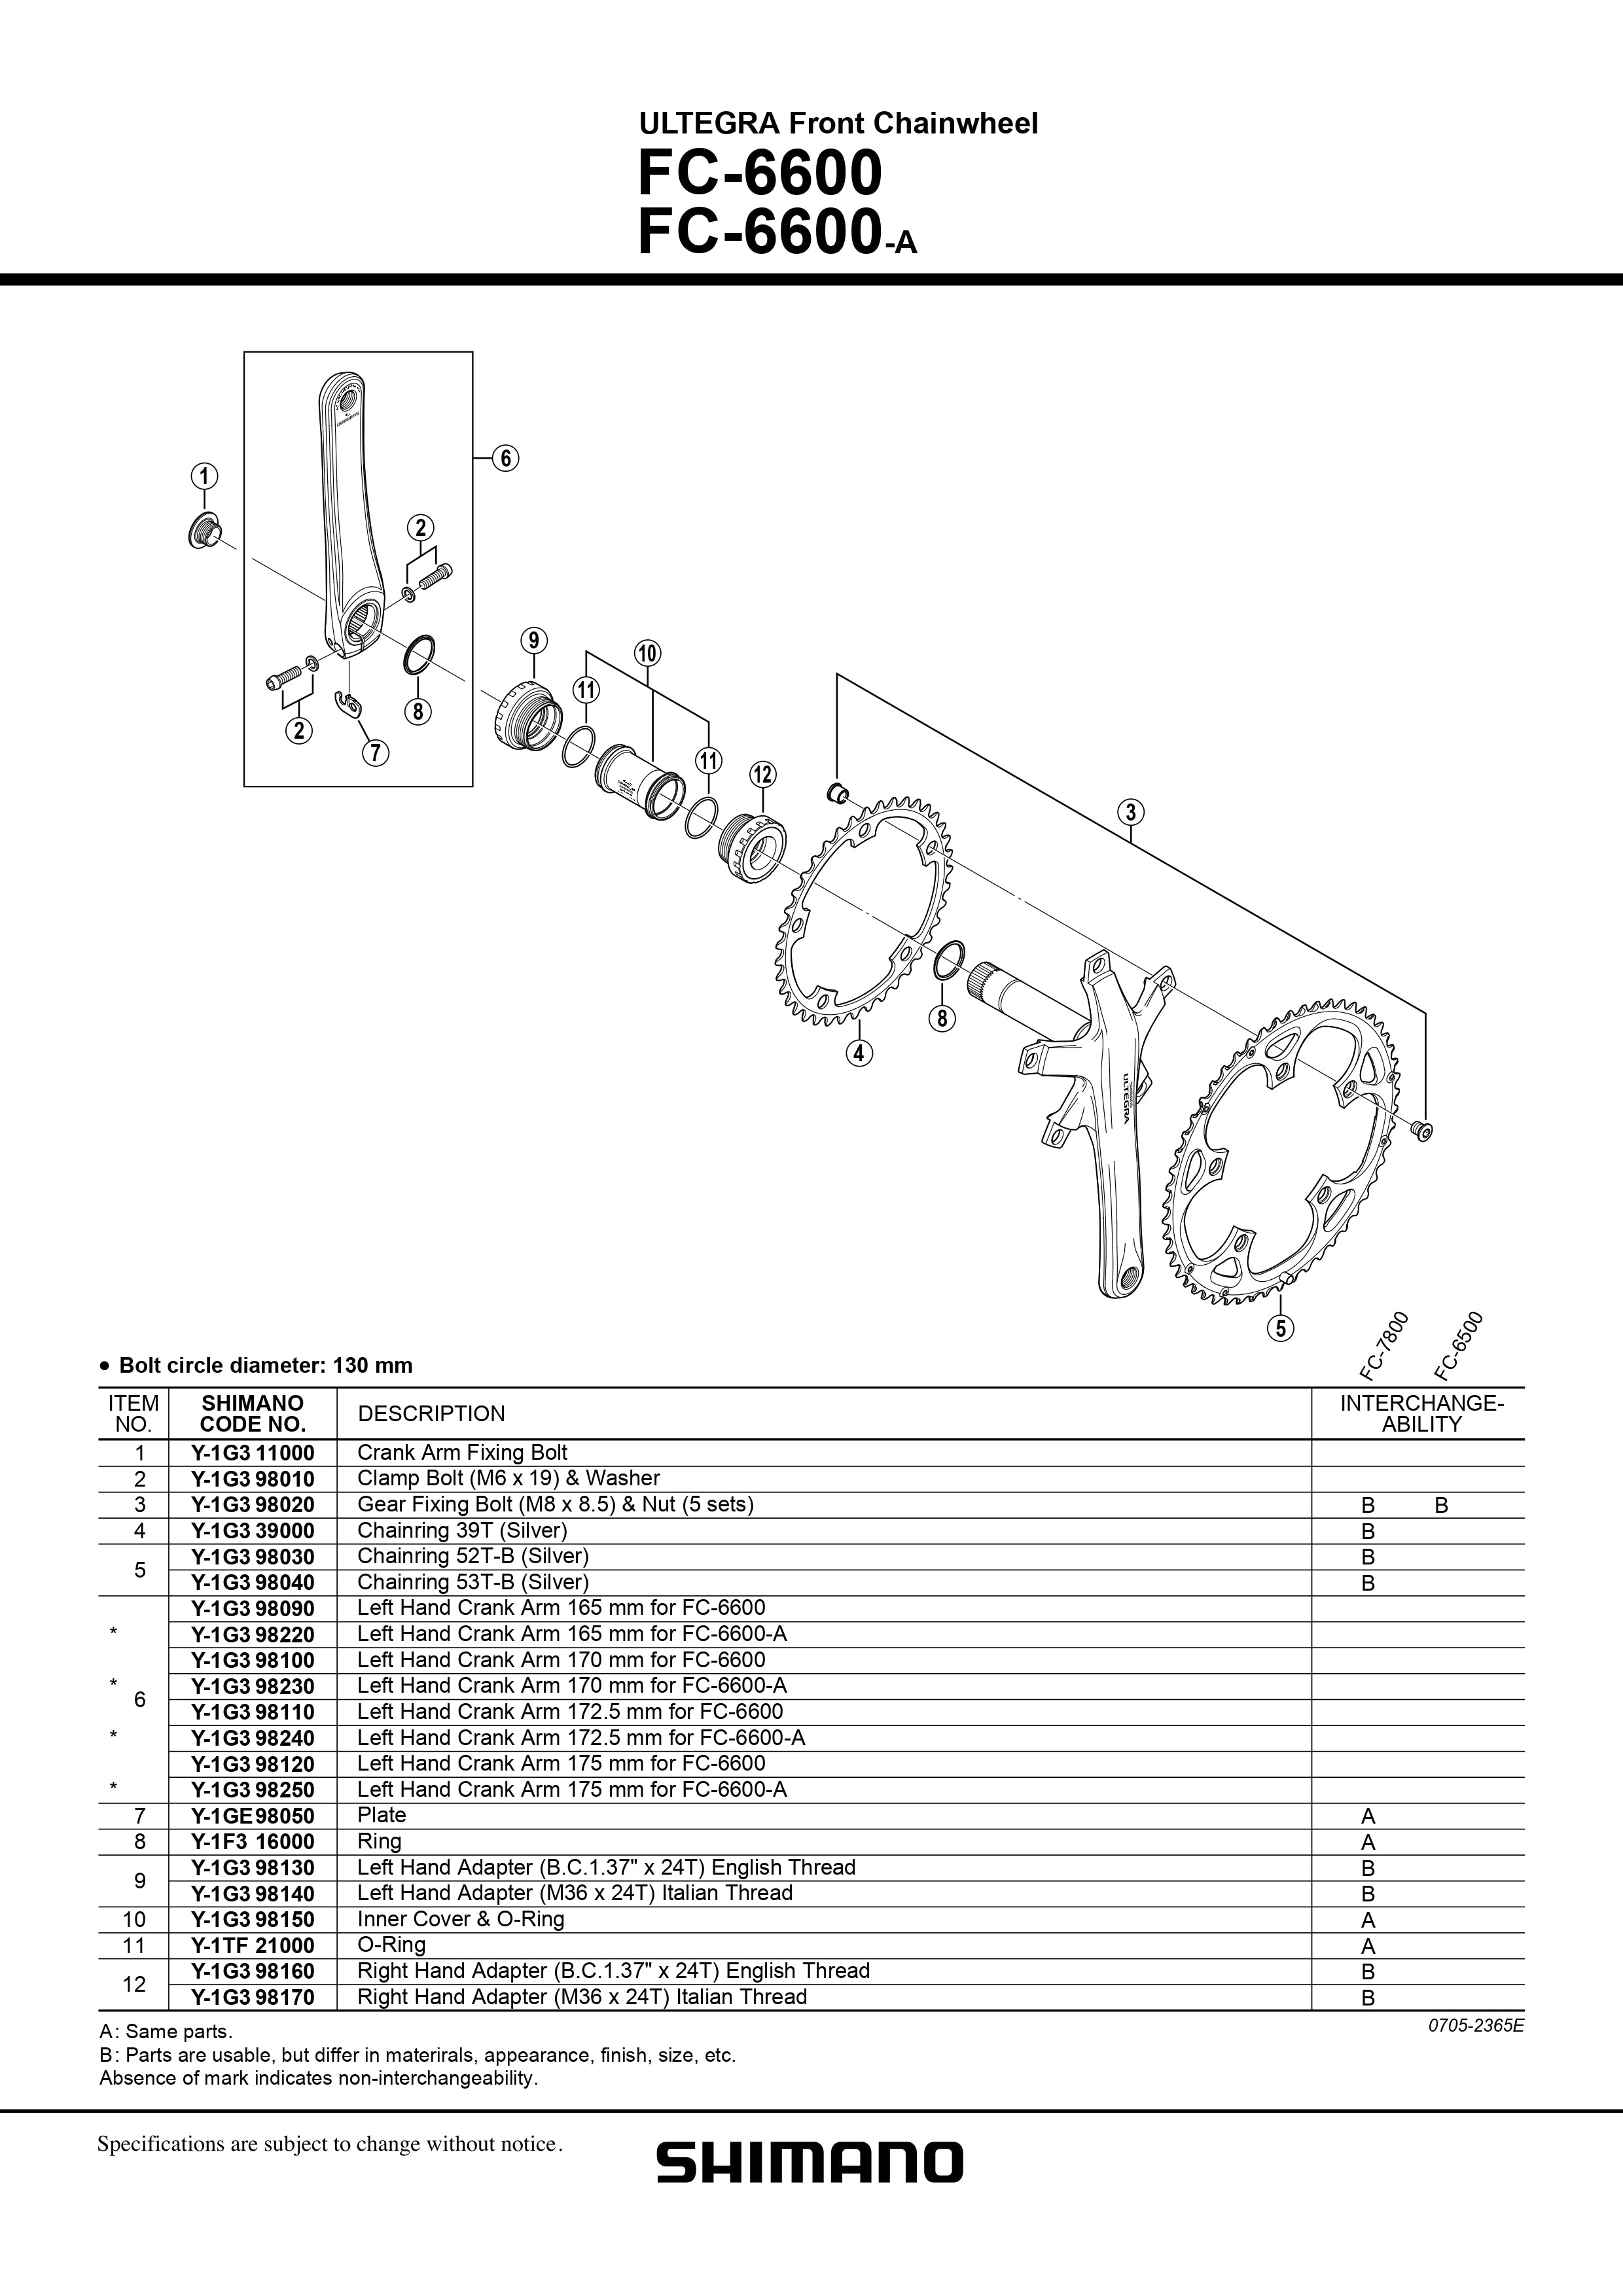 SHIMANO Ultegra FC-6600 Front Chainwheel Right Hand Adapter (B.C.1.37